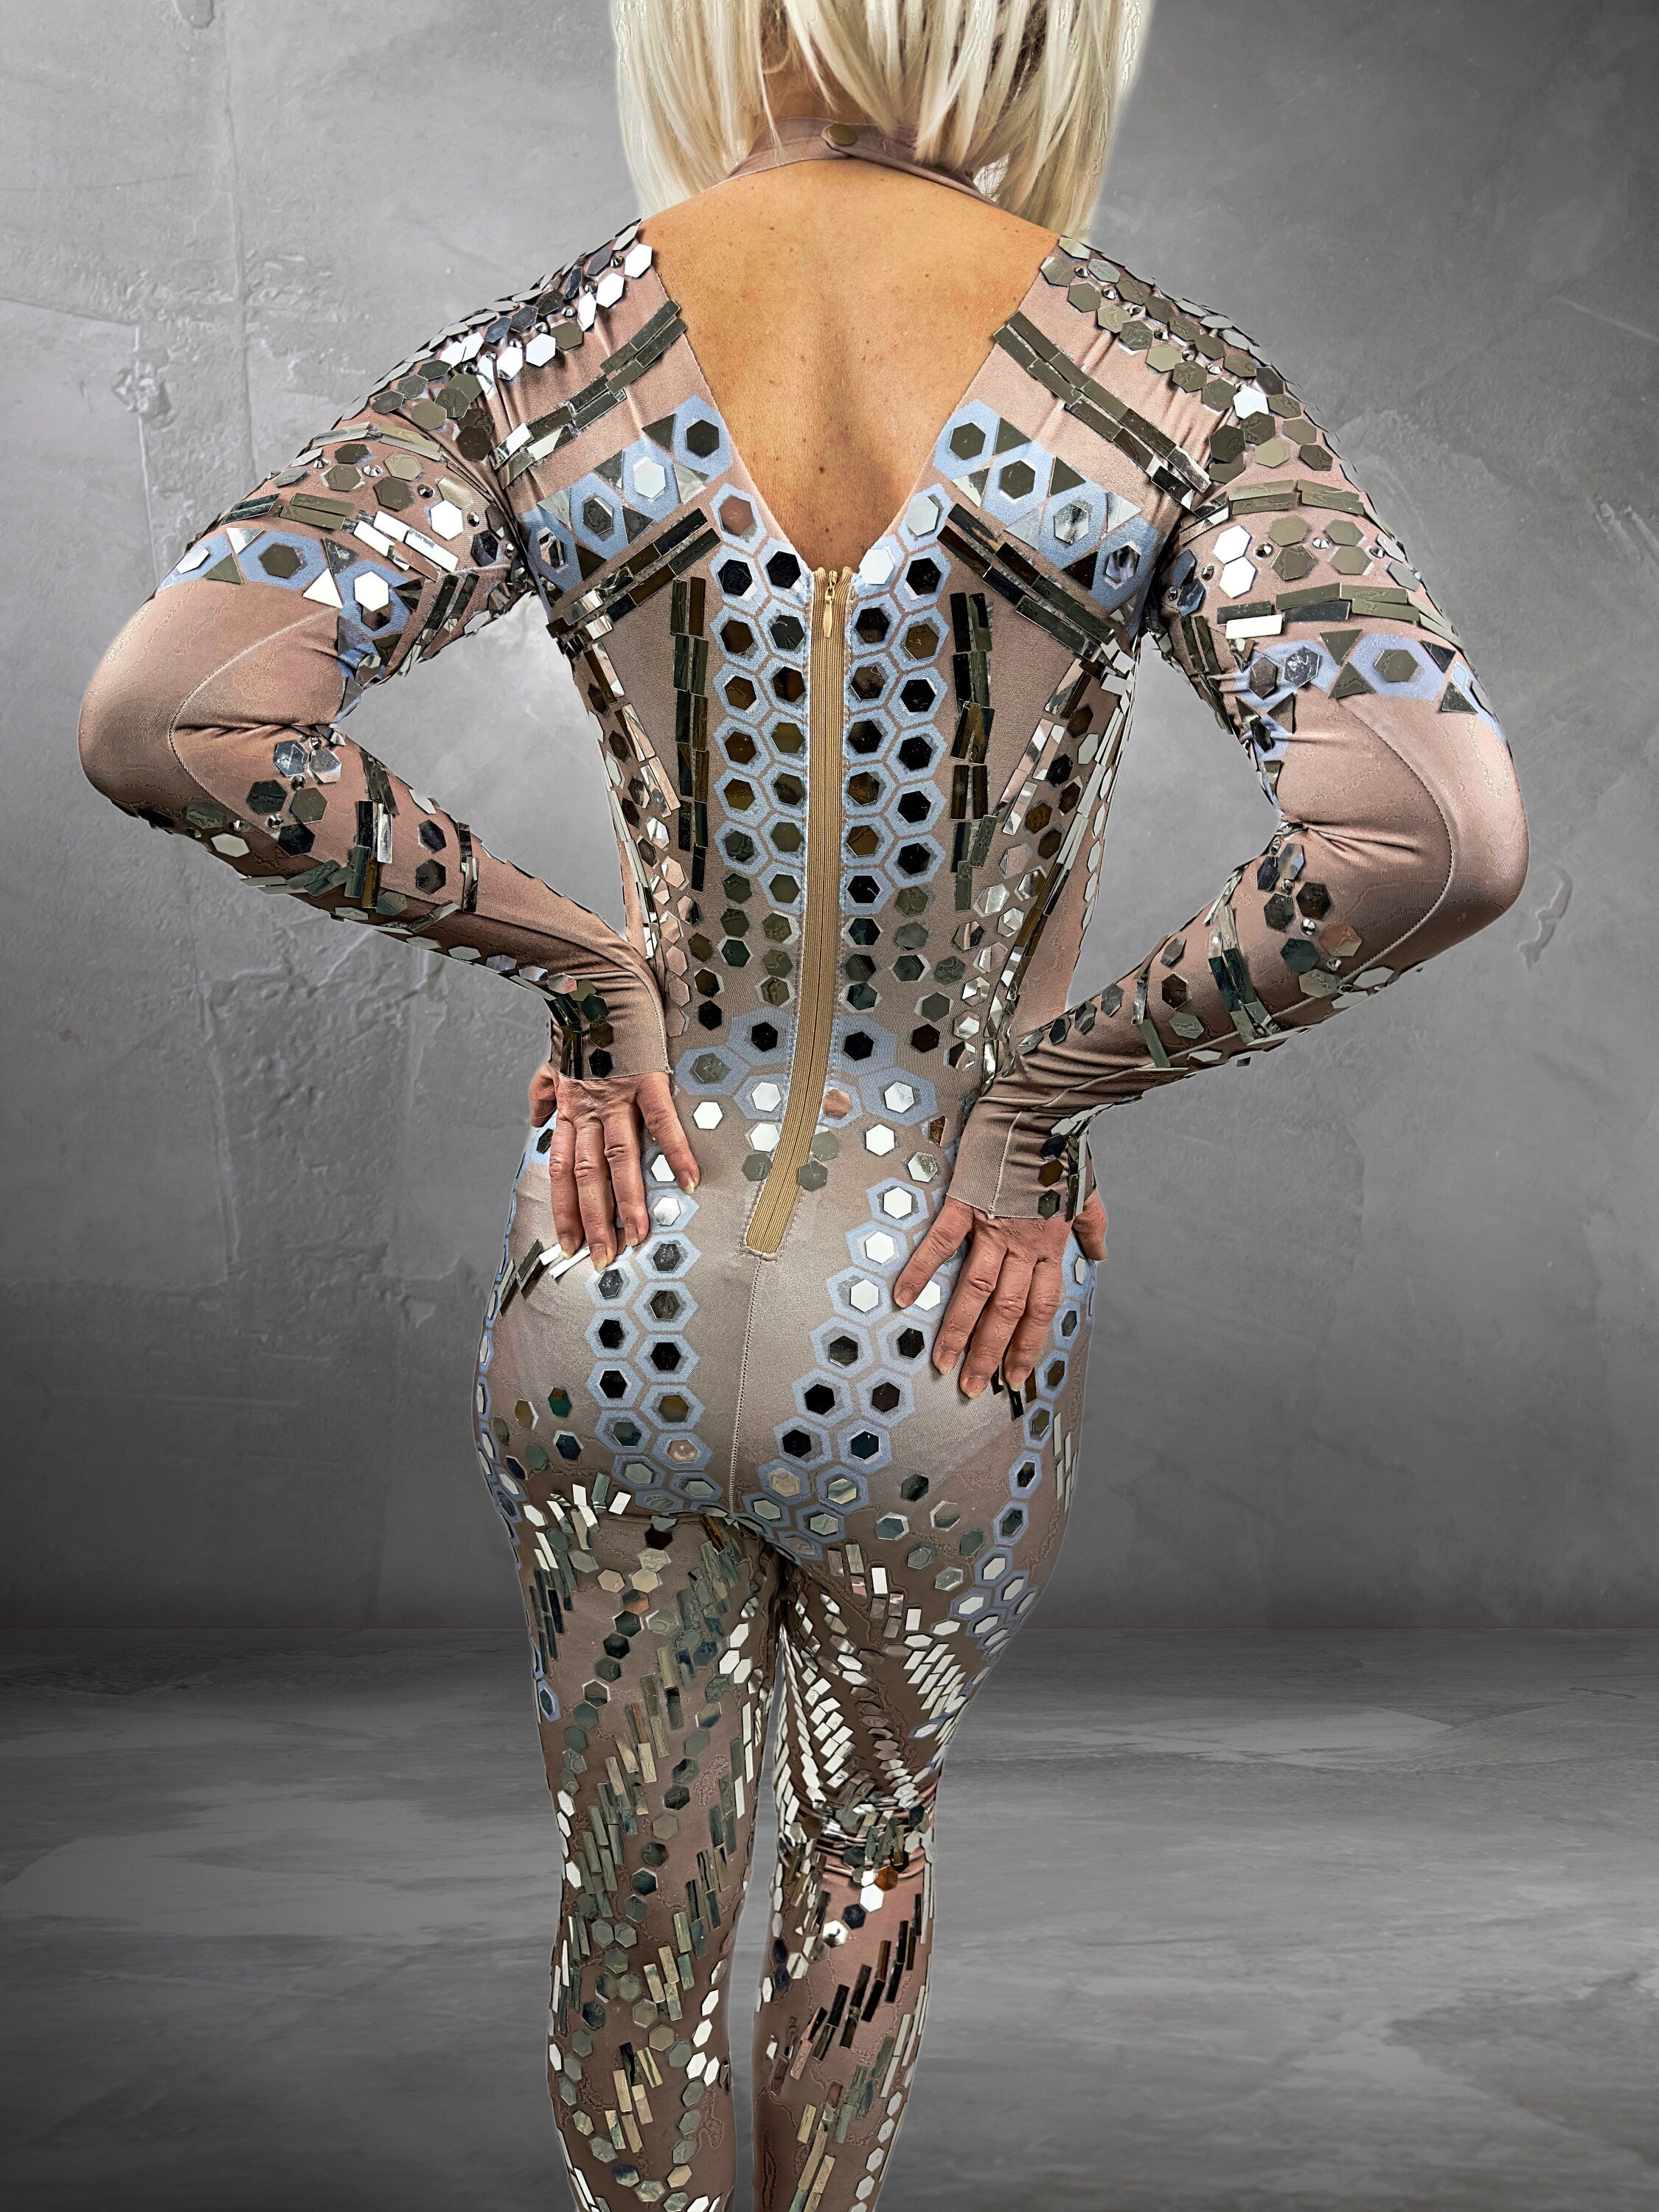 Trinity Reflective Sequins Jumpsuit / Nude Disco Bodysuit / Futuristic Festival Halloween Catsuit Burning Man Mirror NYE Costume Cyber Punk